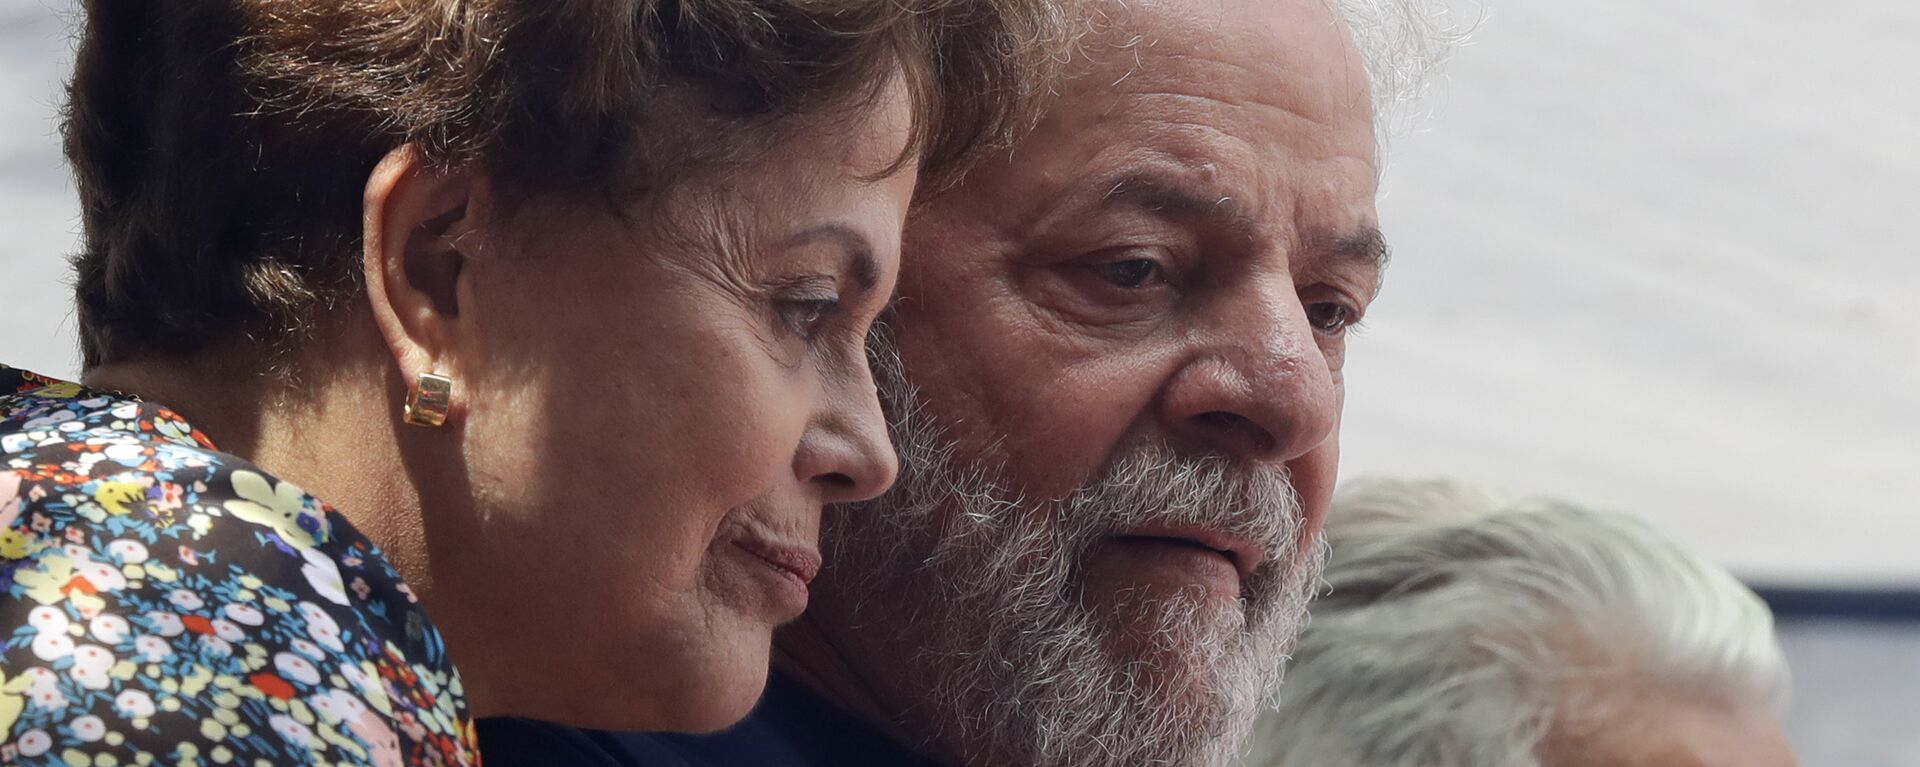 La expresidenta de Brasil Dilma Rousseff y el expresidente Luiz Inacio Lula da Silva  - Sputnik Mundo, 1920, 26.01.2022